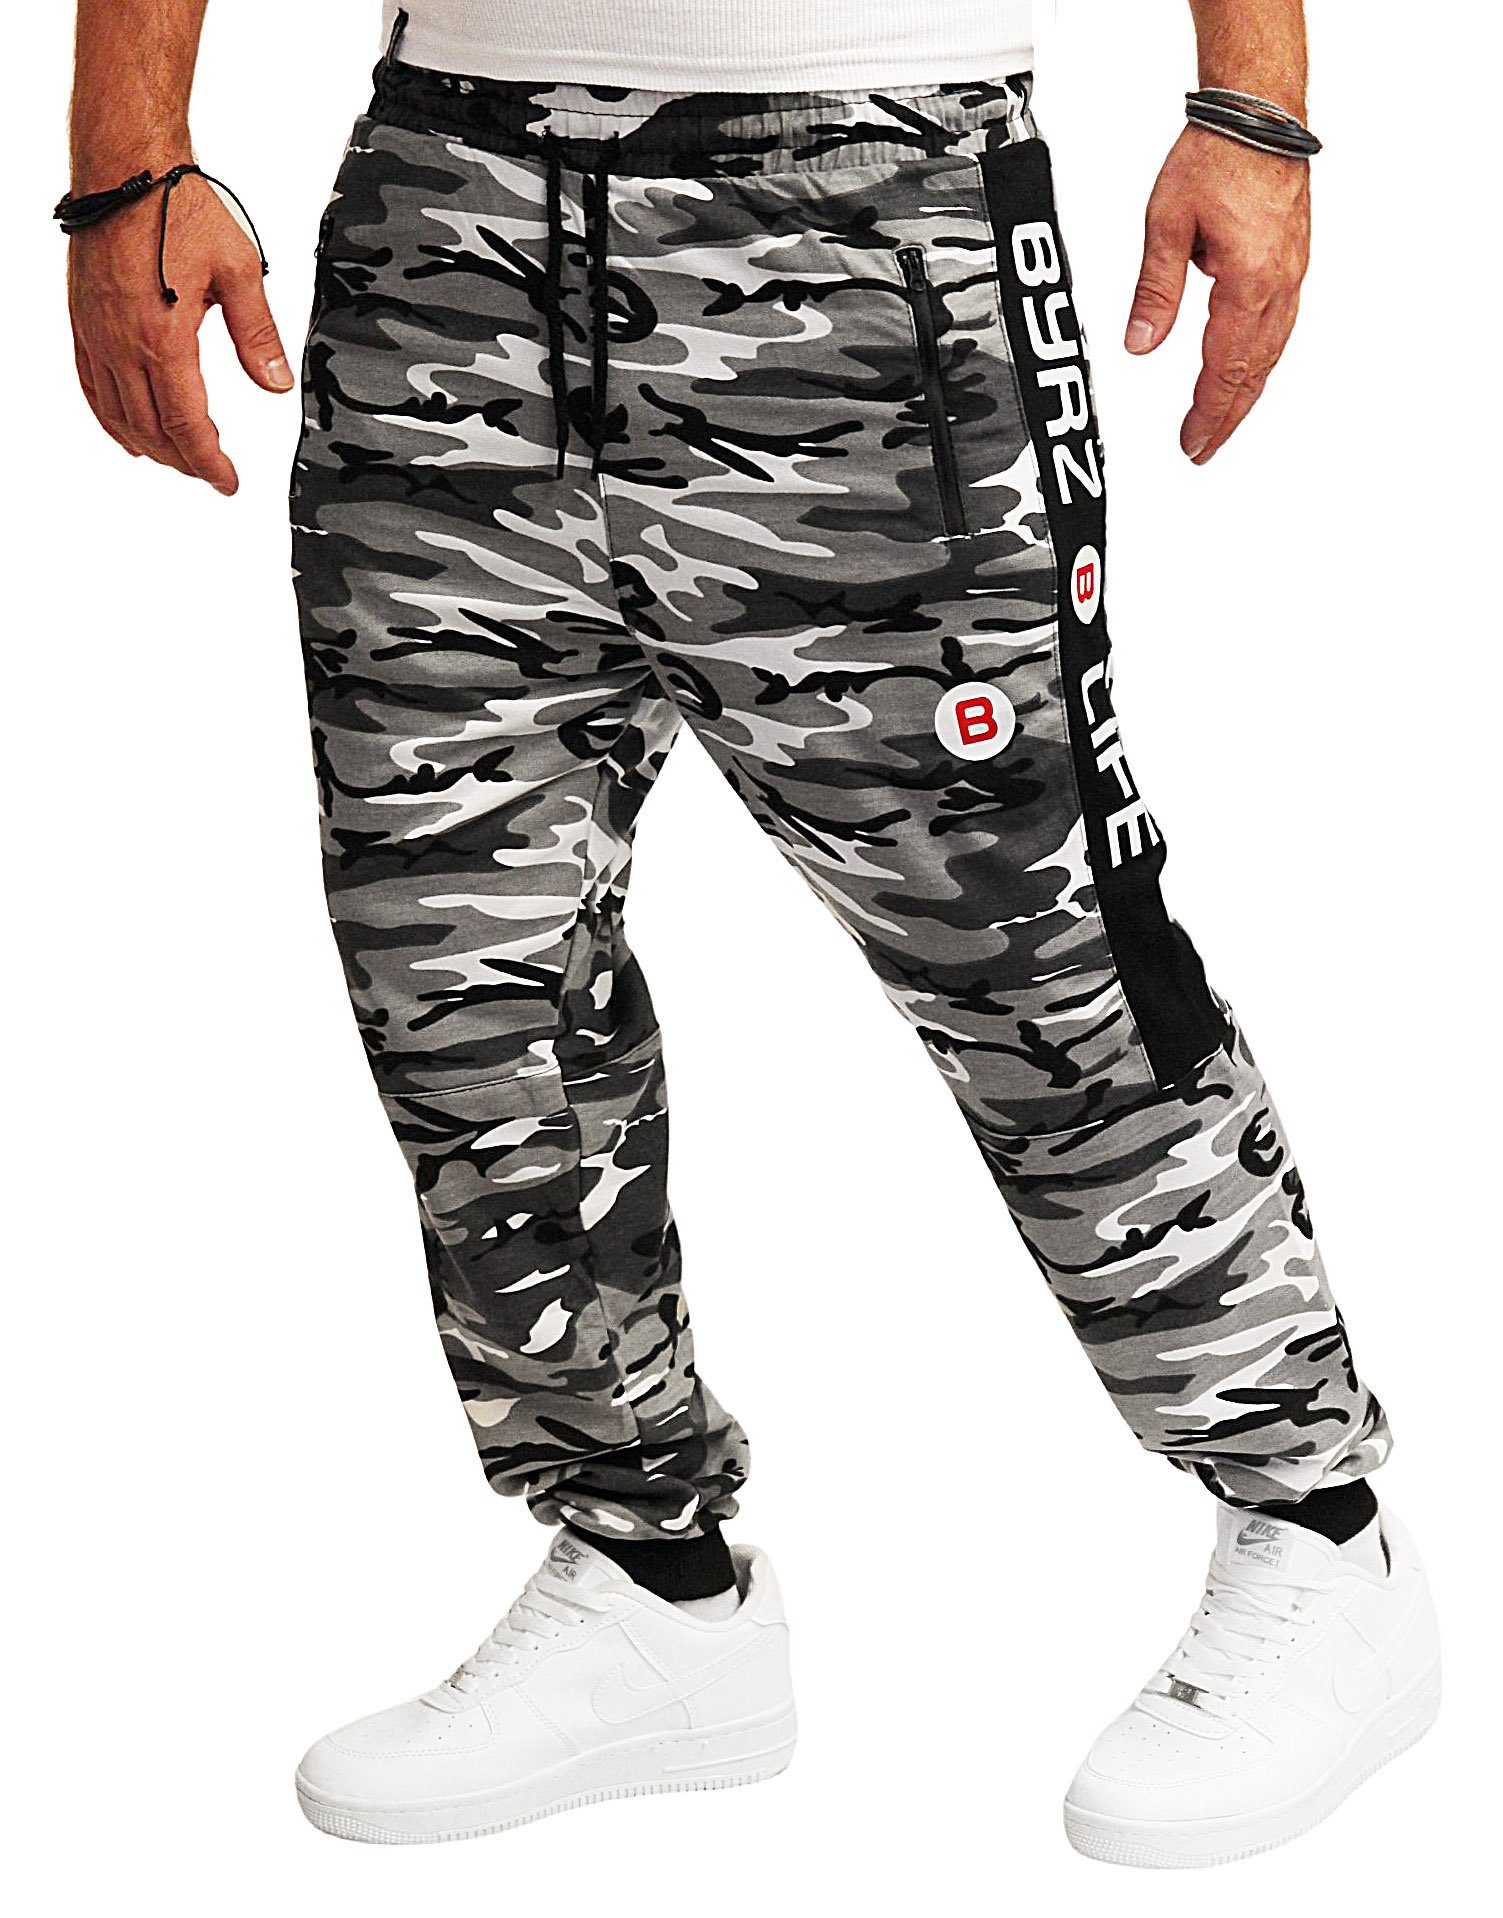 (H.12) Tarn Camouflage Fitnesshose Sport Hose RMK Trainingshose Jogginghose Army Camouflage-Hell Herren